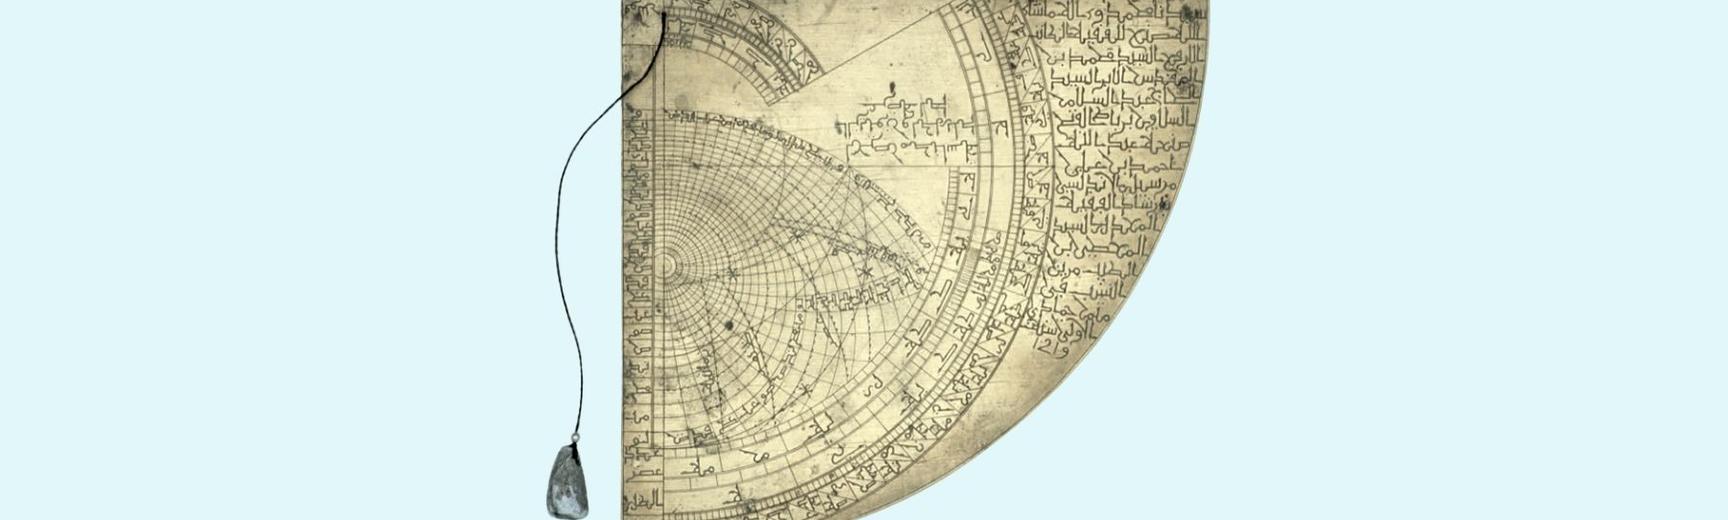 54673 Astrolabe Quadrant Profatius type by Abdallah Ahmad b Ali al Andalusi, Morocco 1804